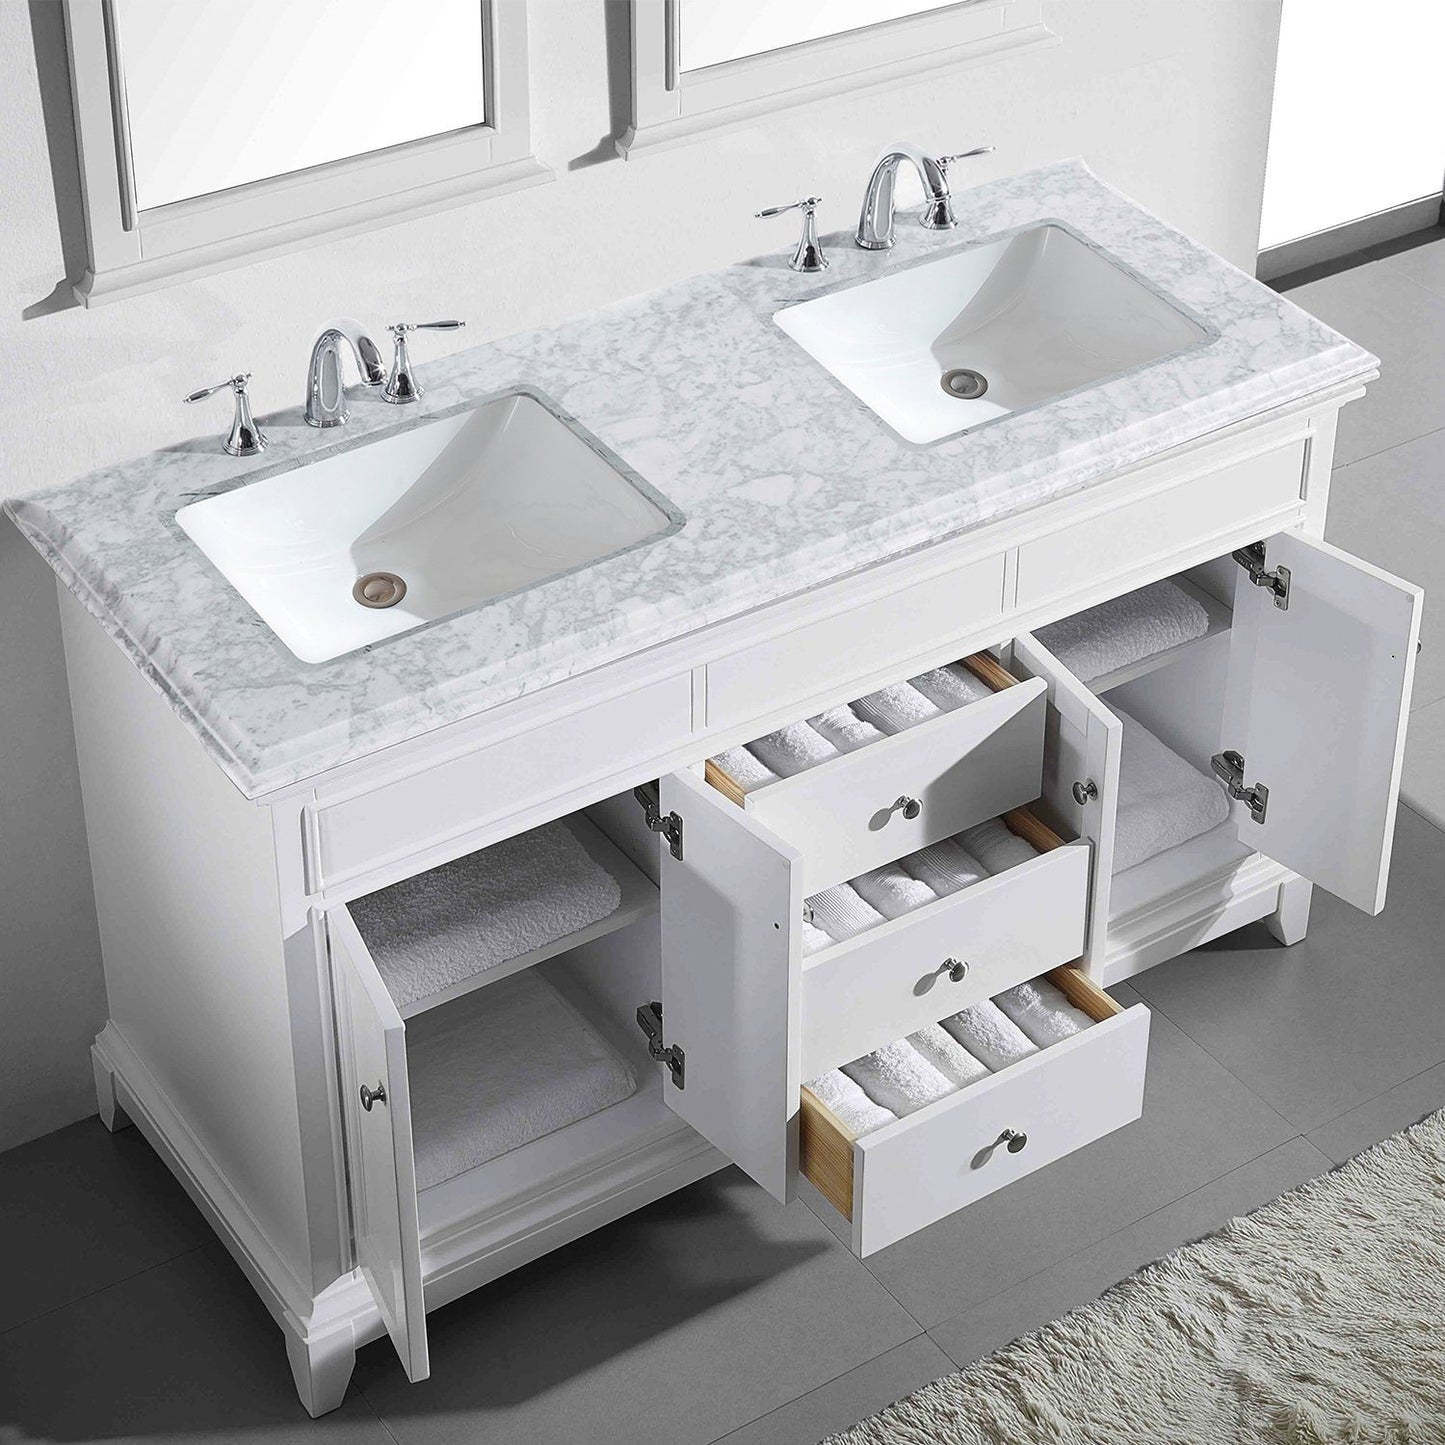 Eviva Elite Princeton 72" Solid Wood Bathroom Vanity Set with Double OG White Carrera Marble Top - Luxe Bathroom Vanities Luxury Bathroom Fixtures Bathroom Furniture